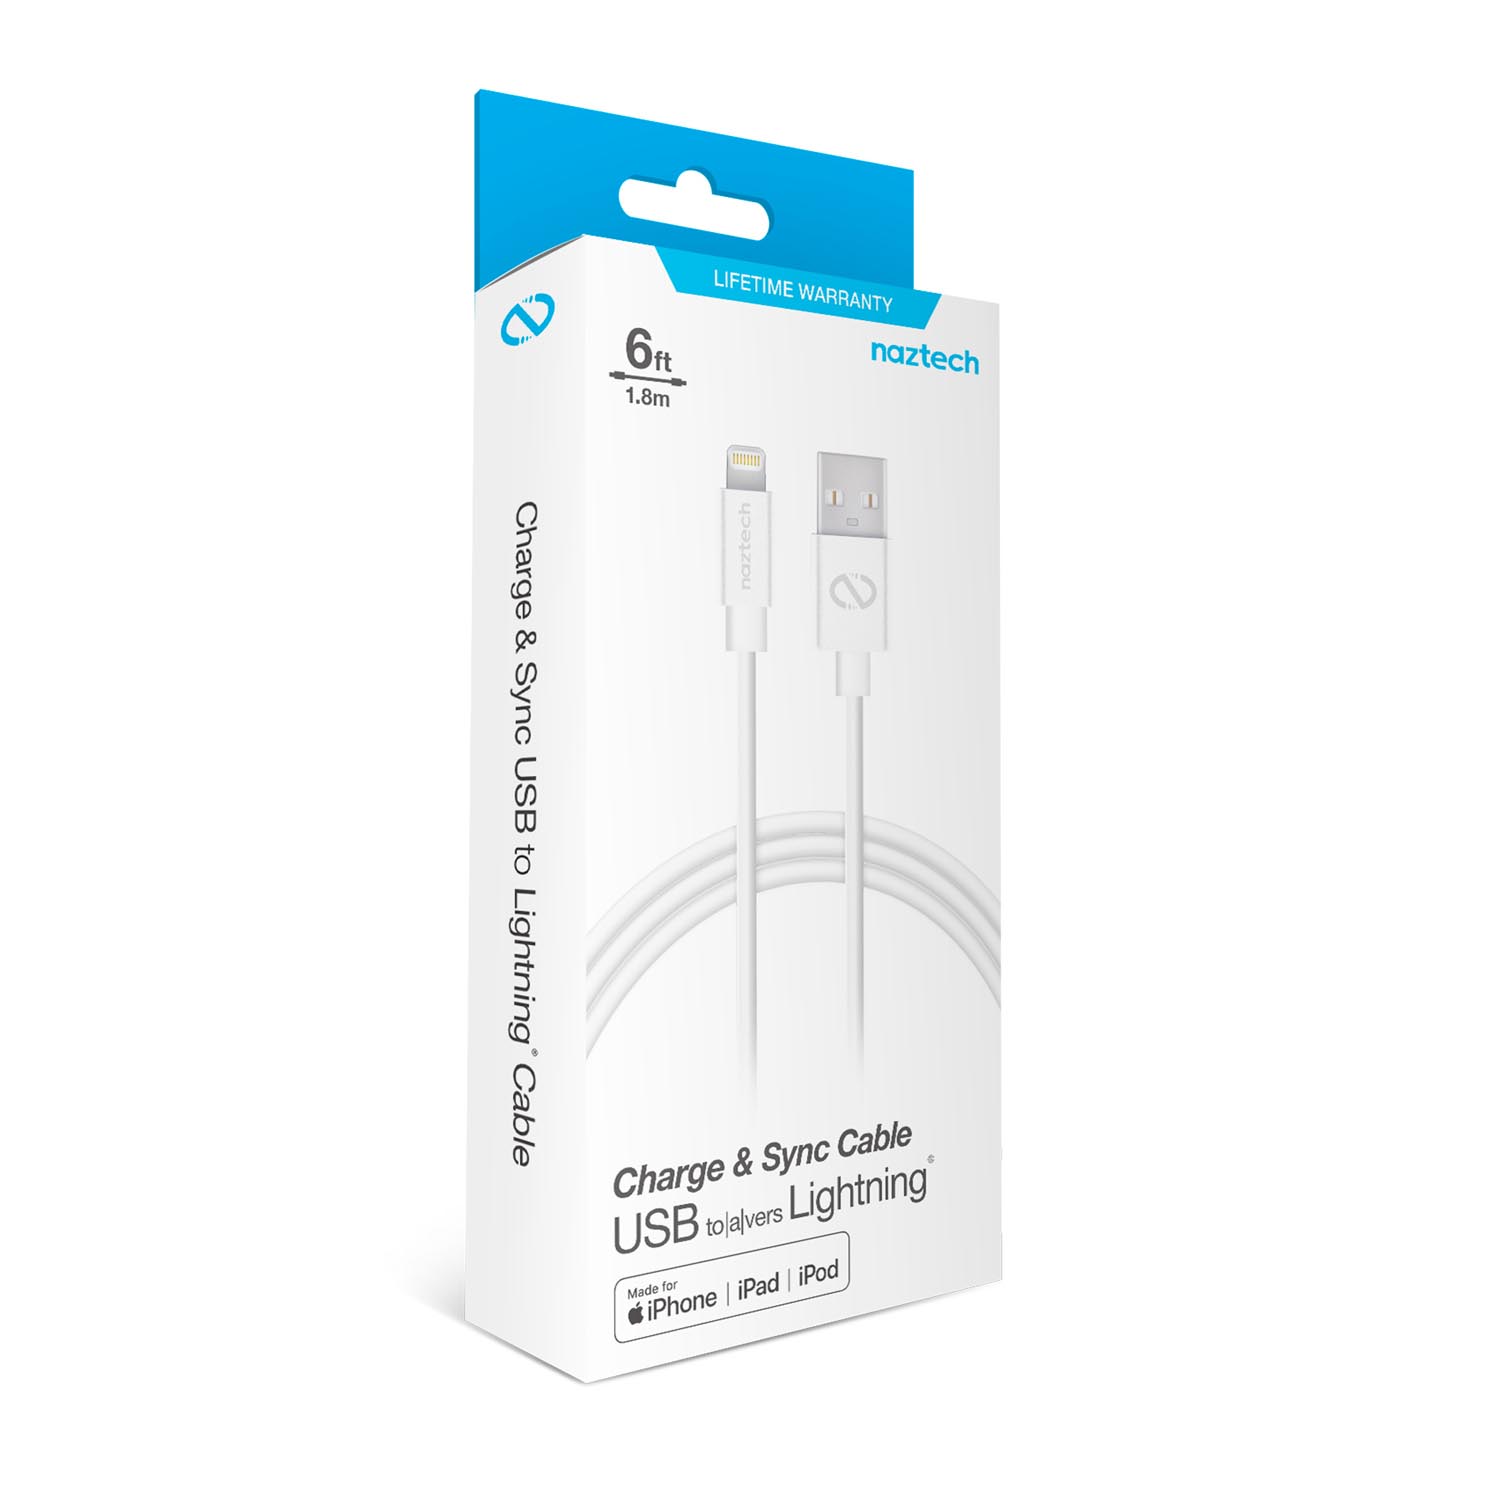 Naztech USB To MFi Lightning Cable